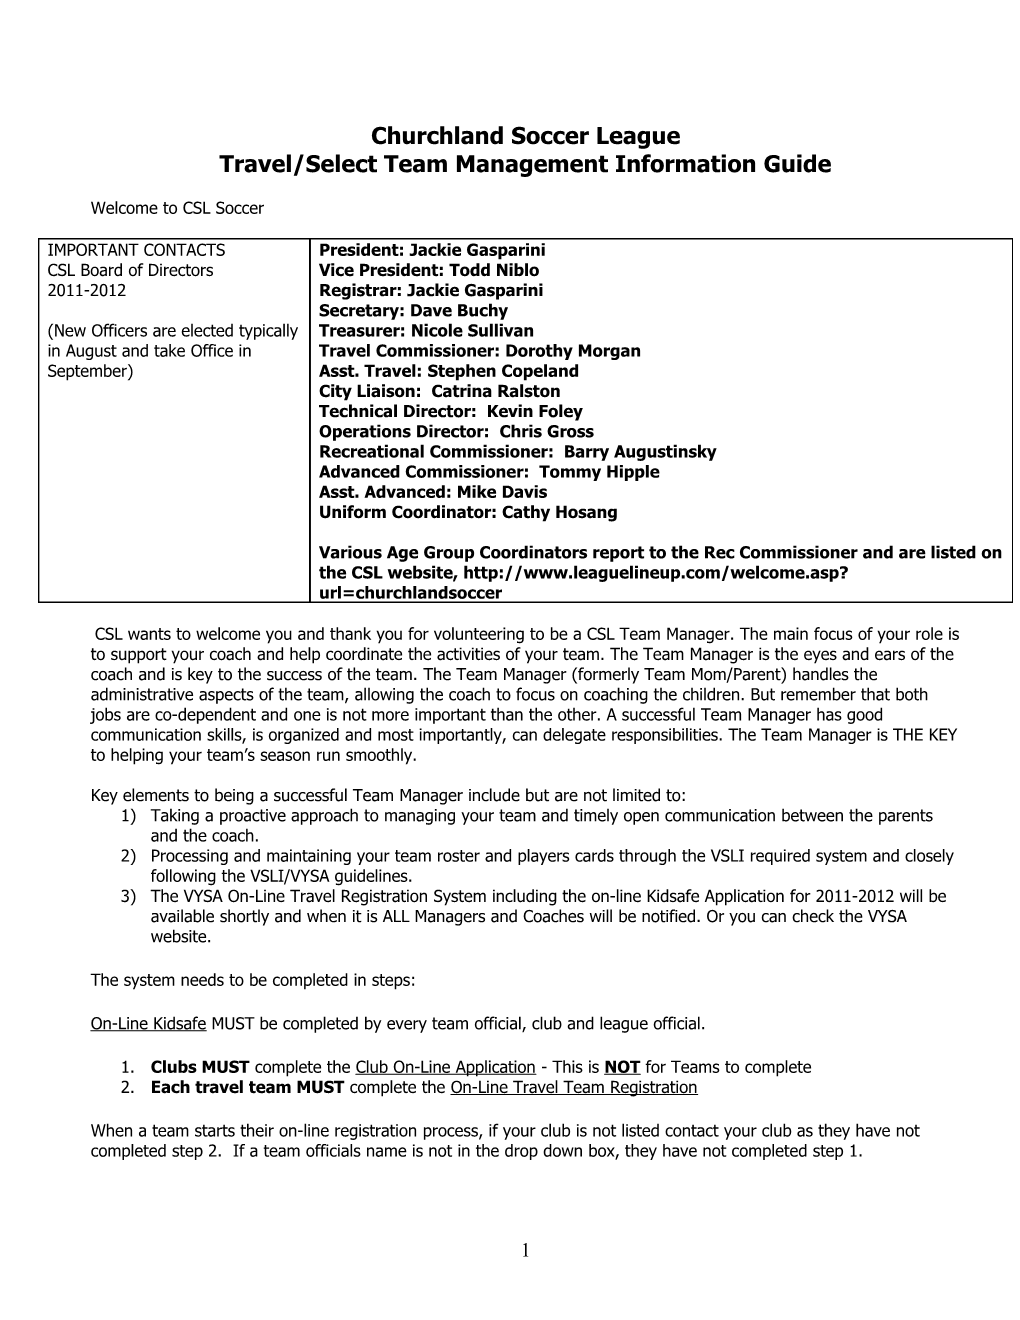 Travel/Select Team Management Information Guide